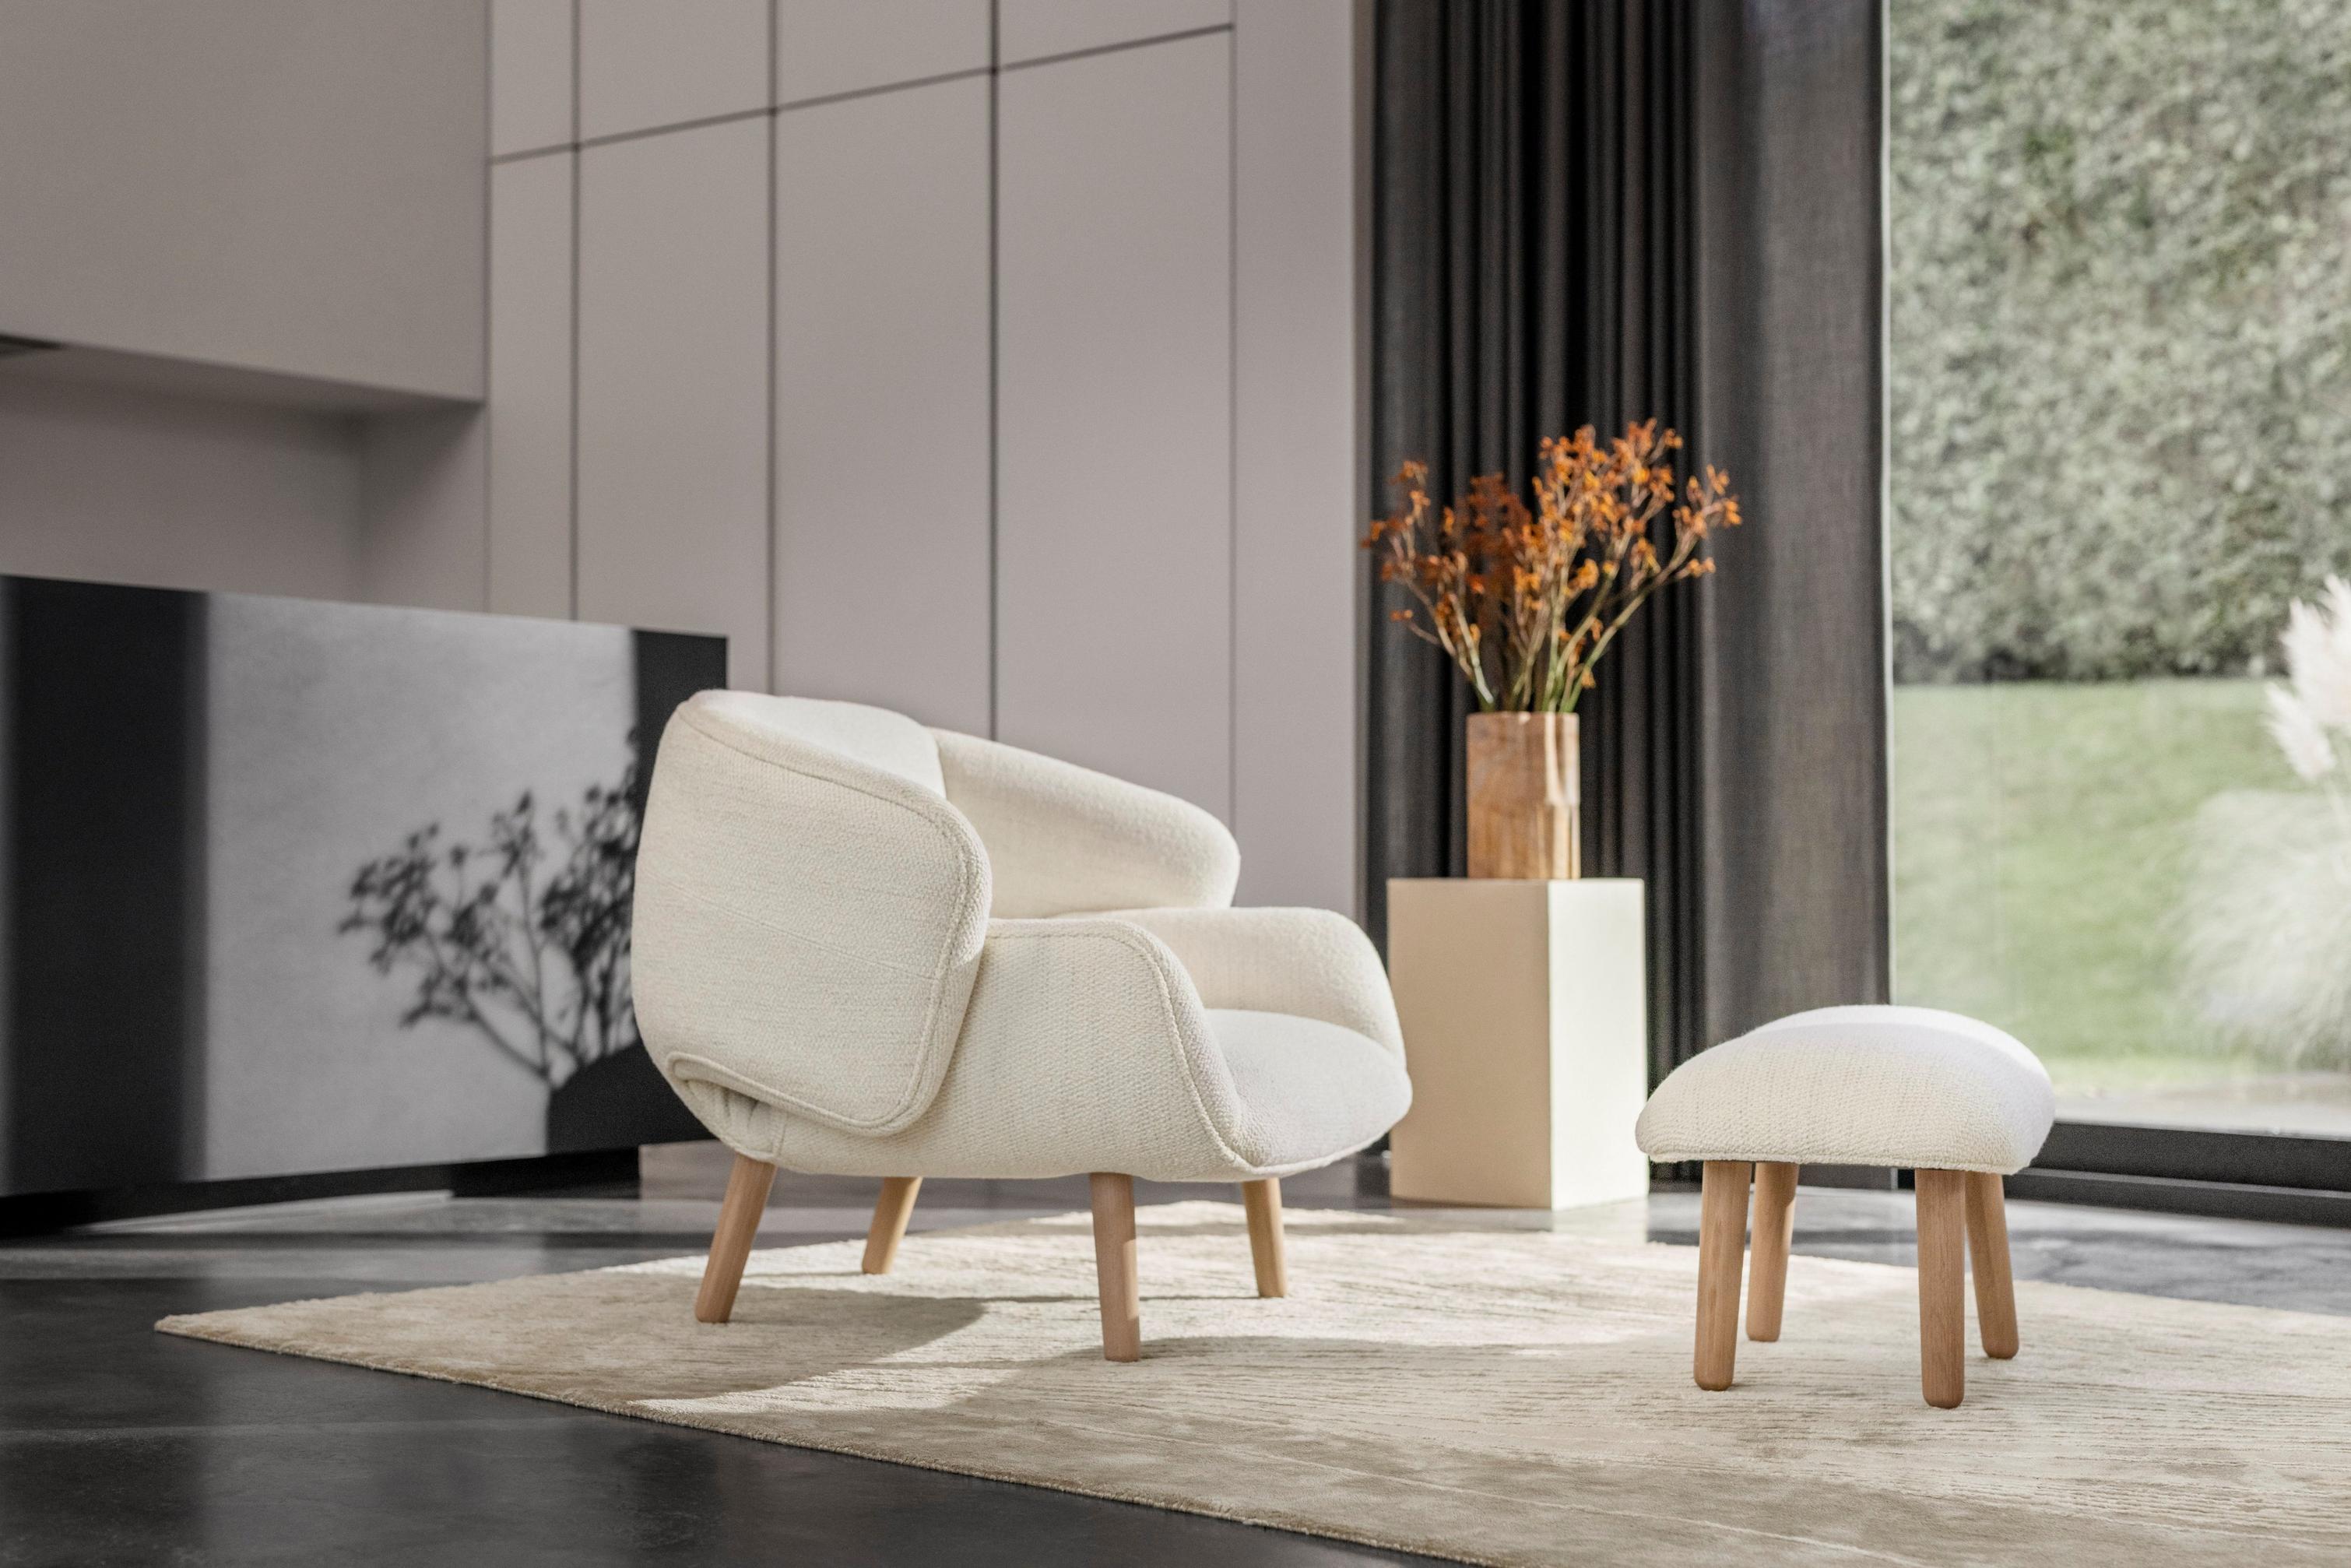 Salon lumineux avec chaise Fusion en tissu Lazio blanc et repose-pieds assorti.